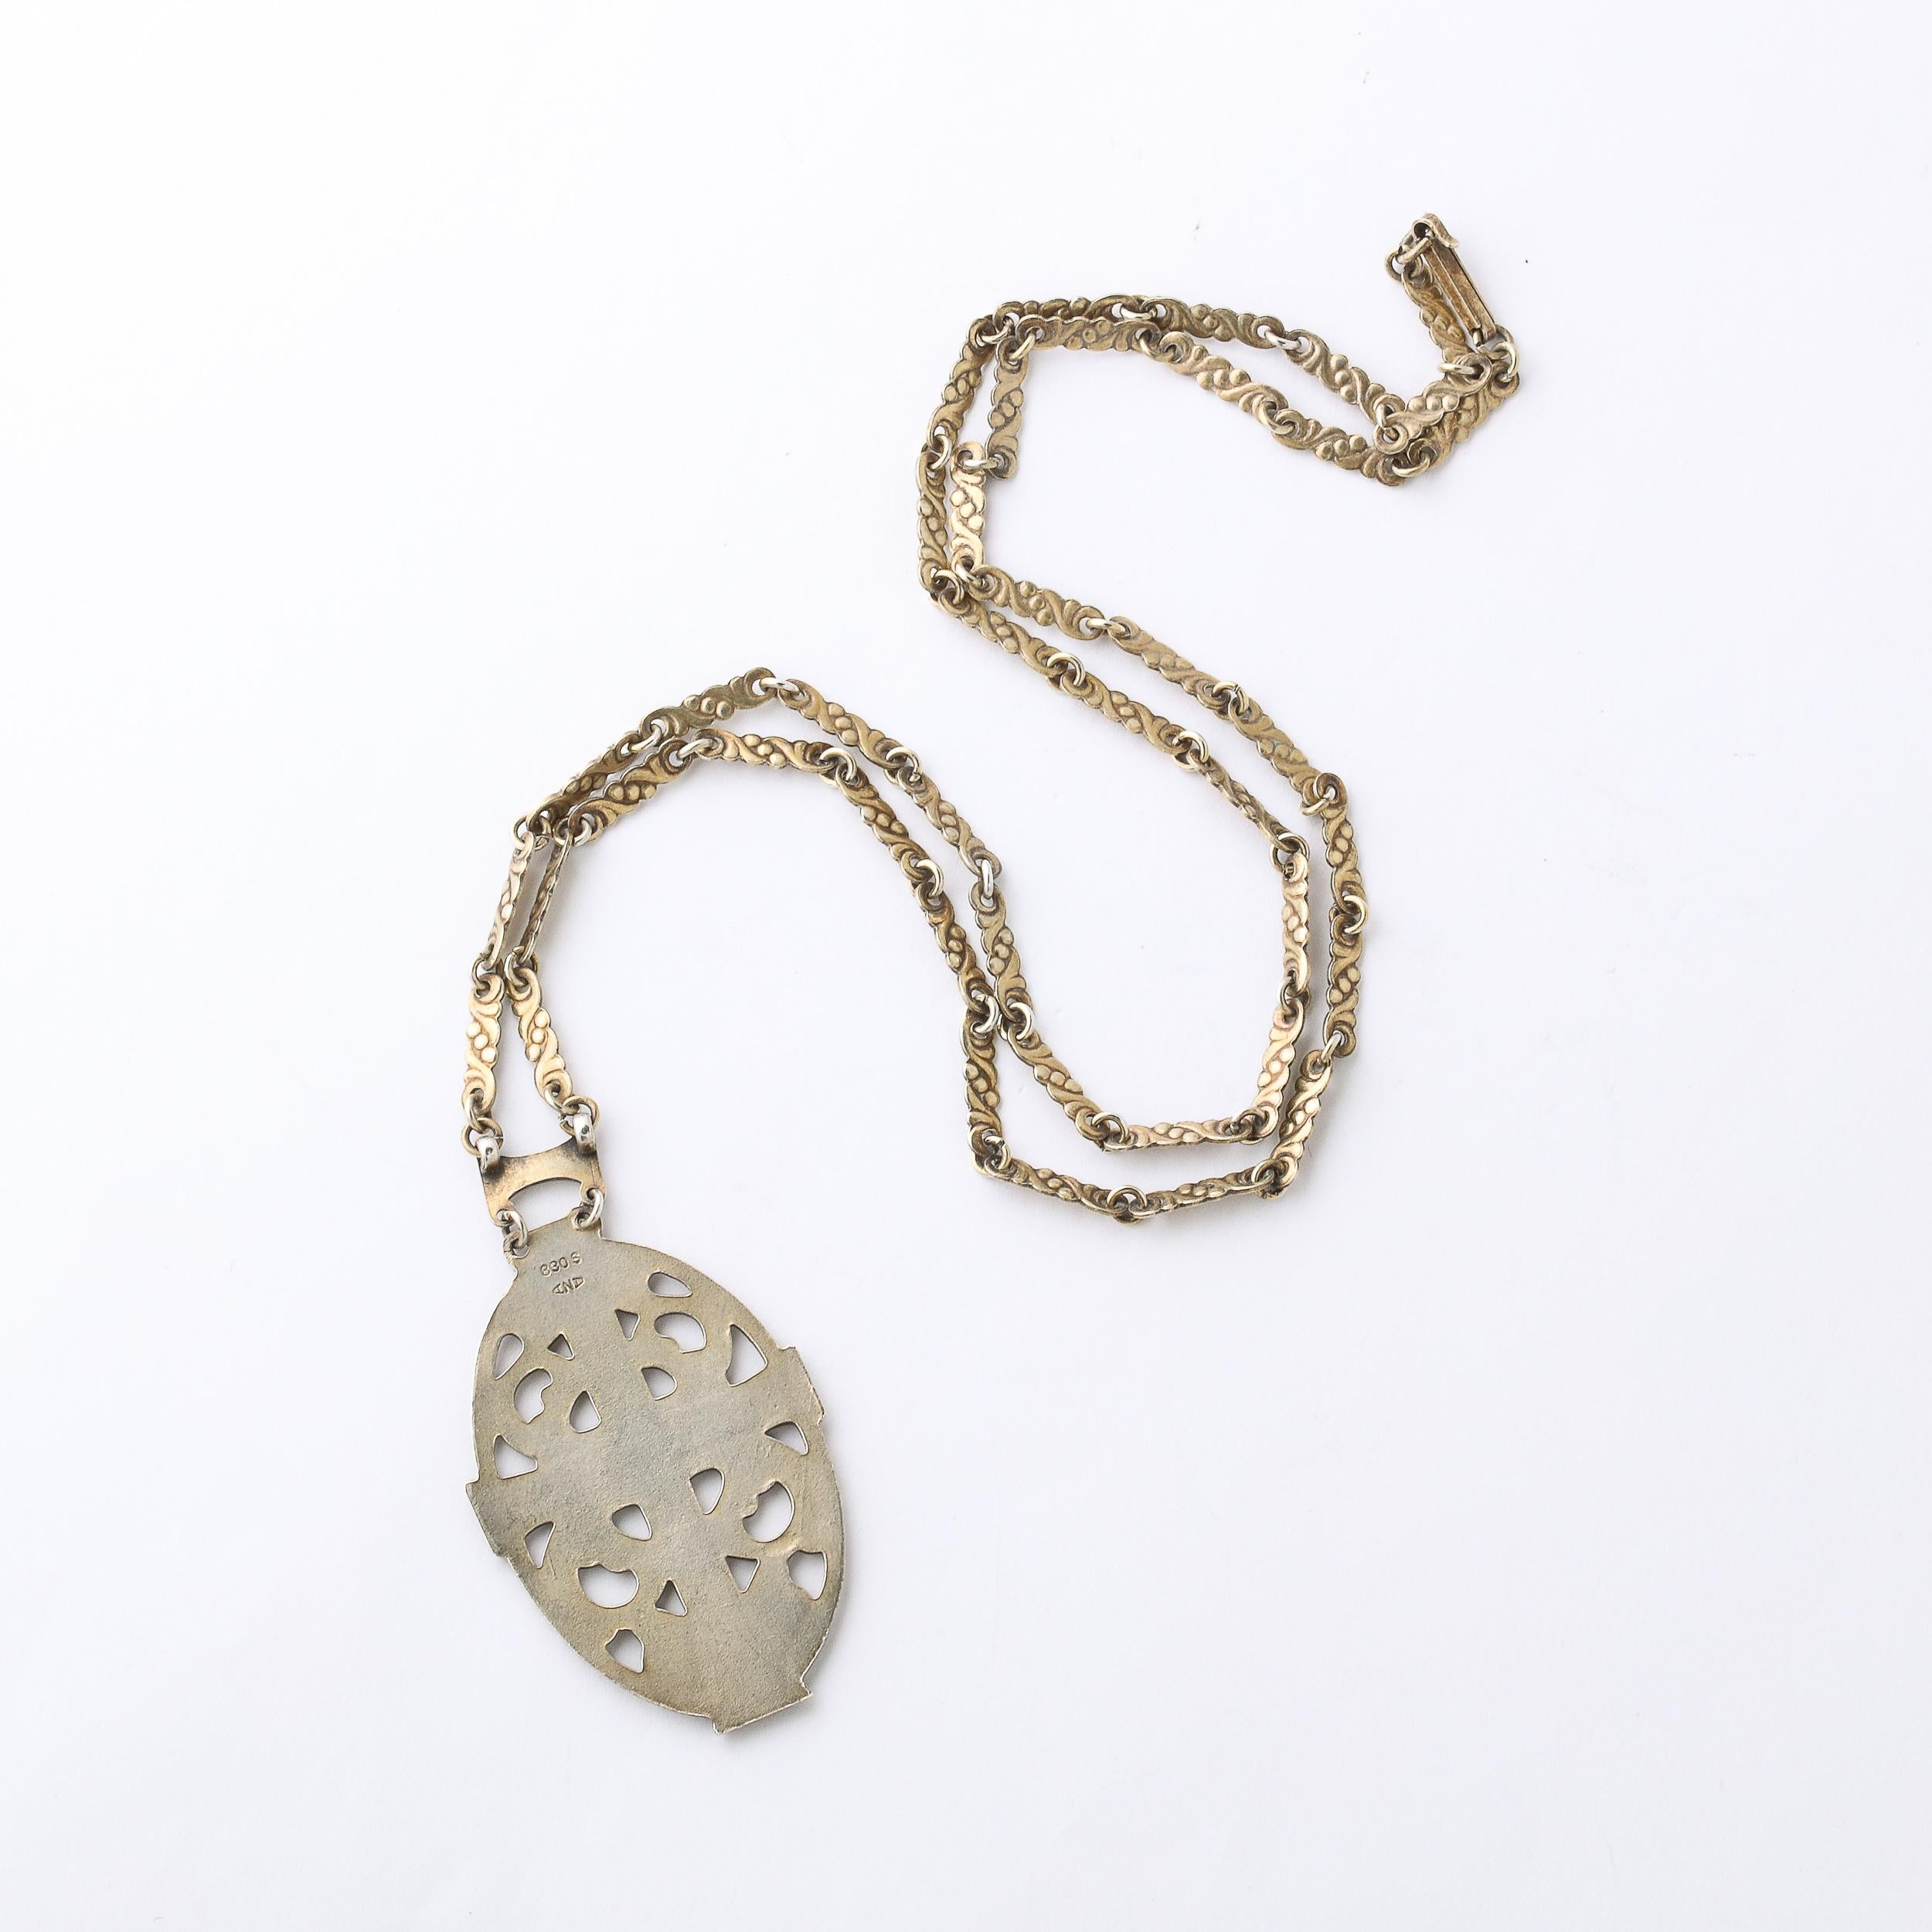 Antique Gilt Silver & Enamel Decorated Openwork Cross Pendant Necklace For Sale 1